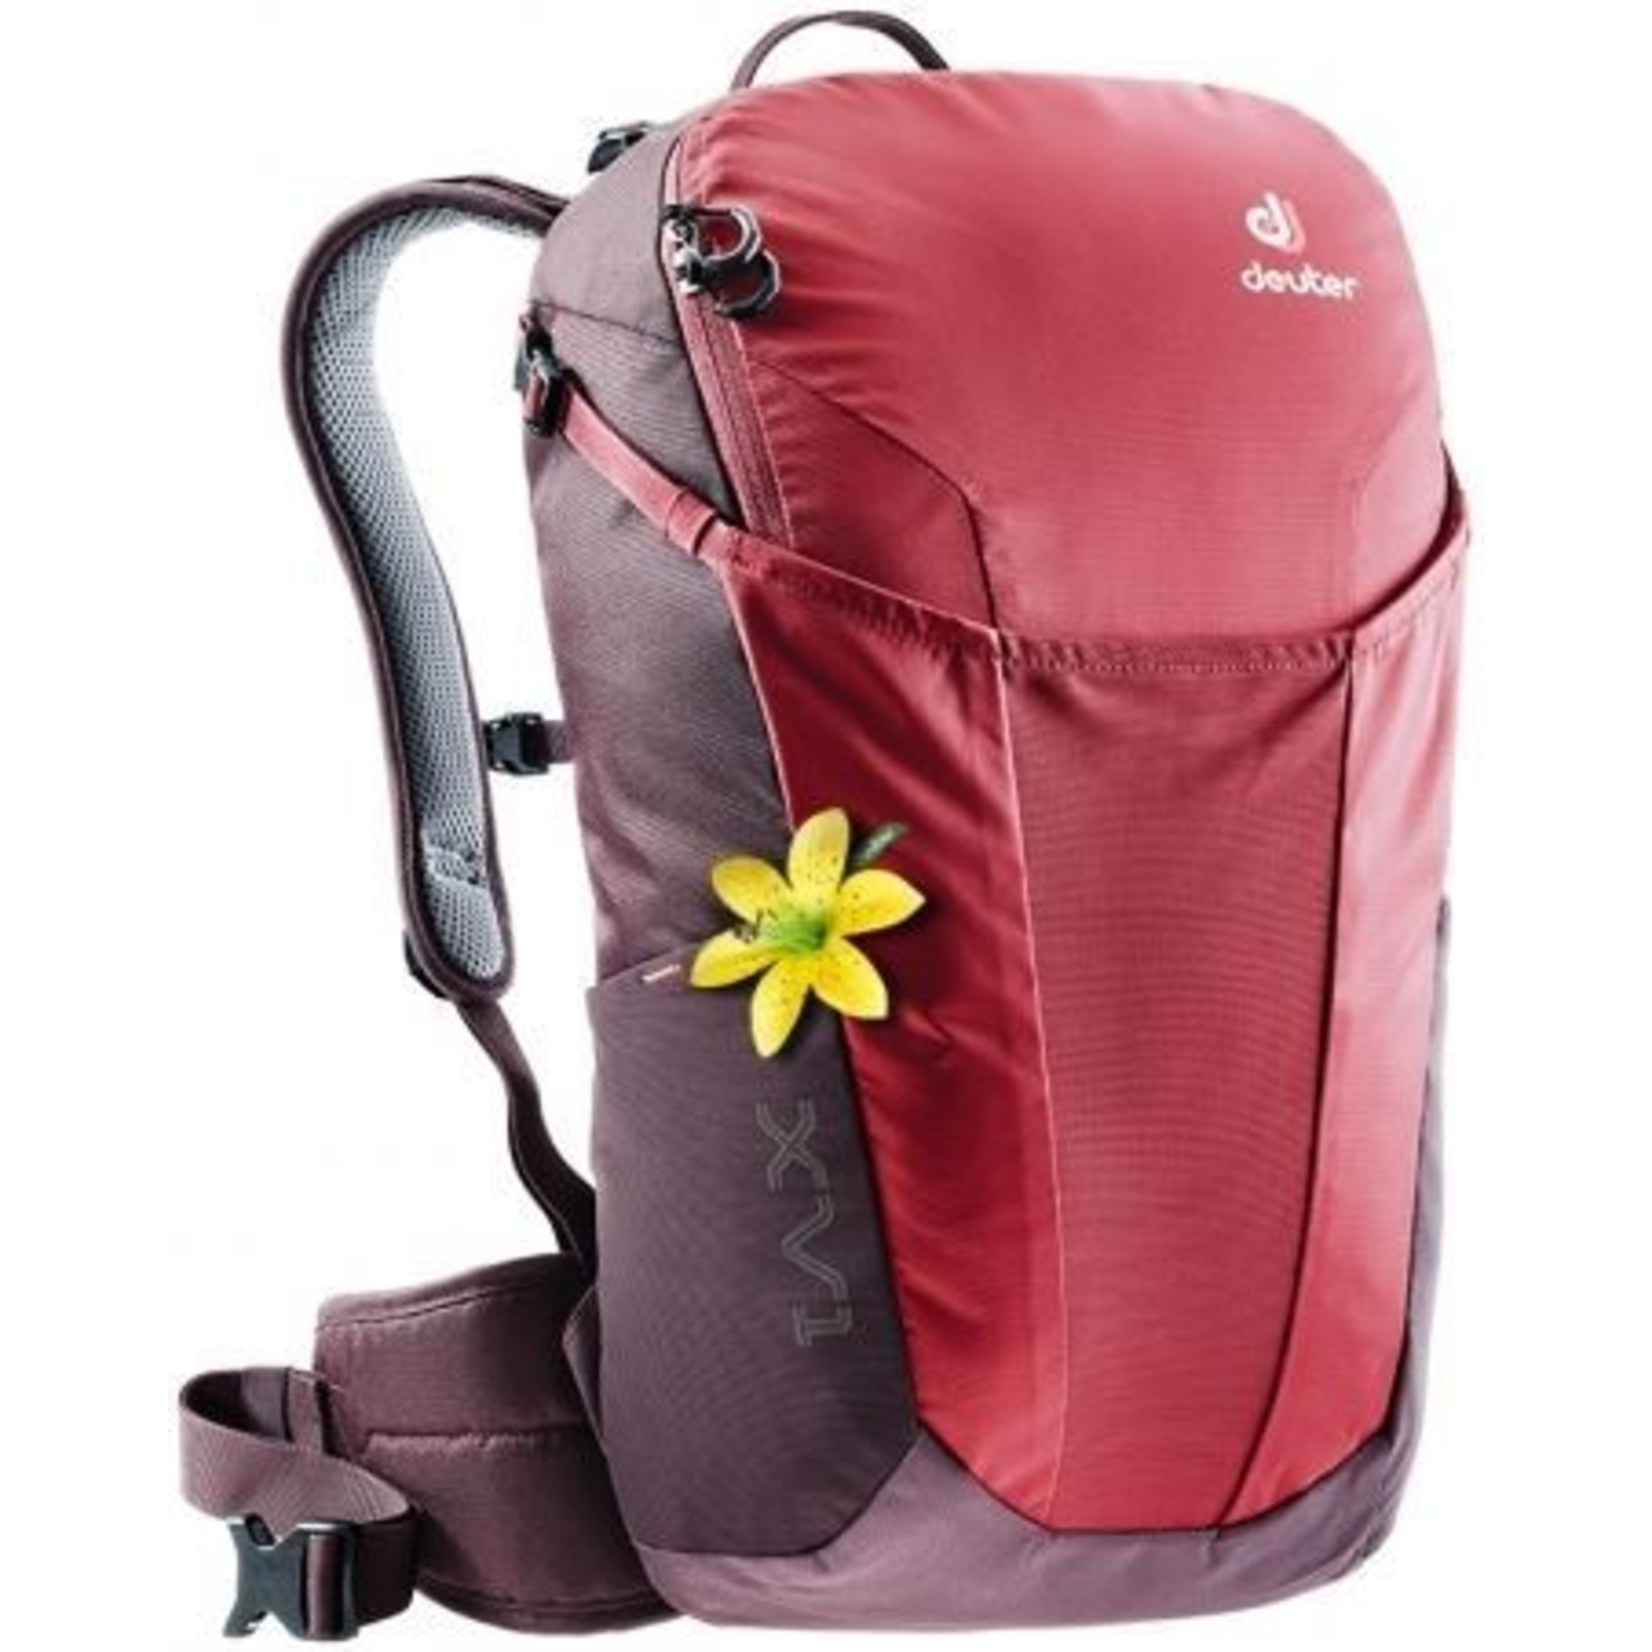 Deuter Deuter OP XV 1 SL Travel Backpack Cranberry-Aubergine